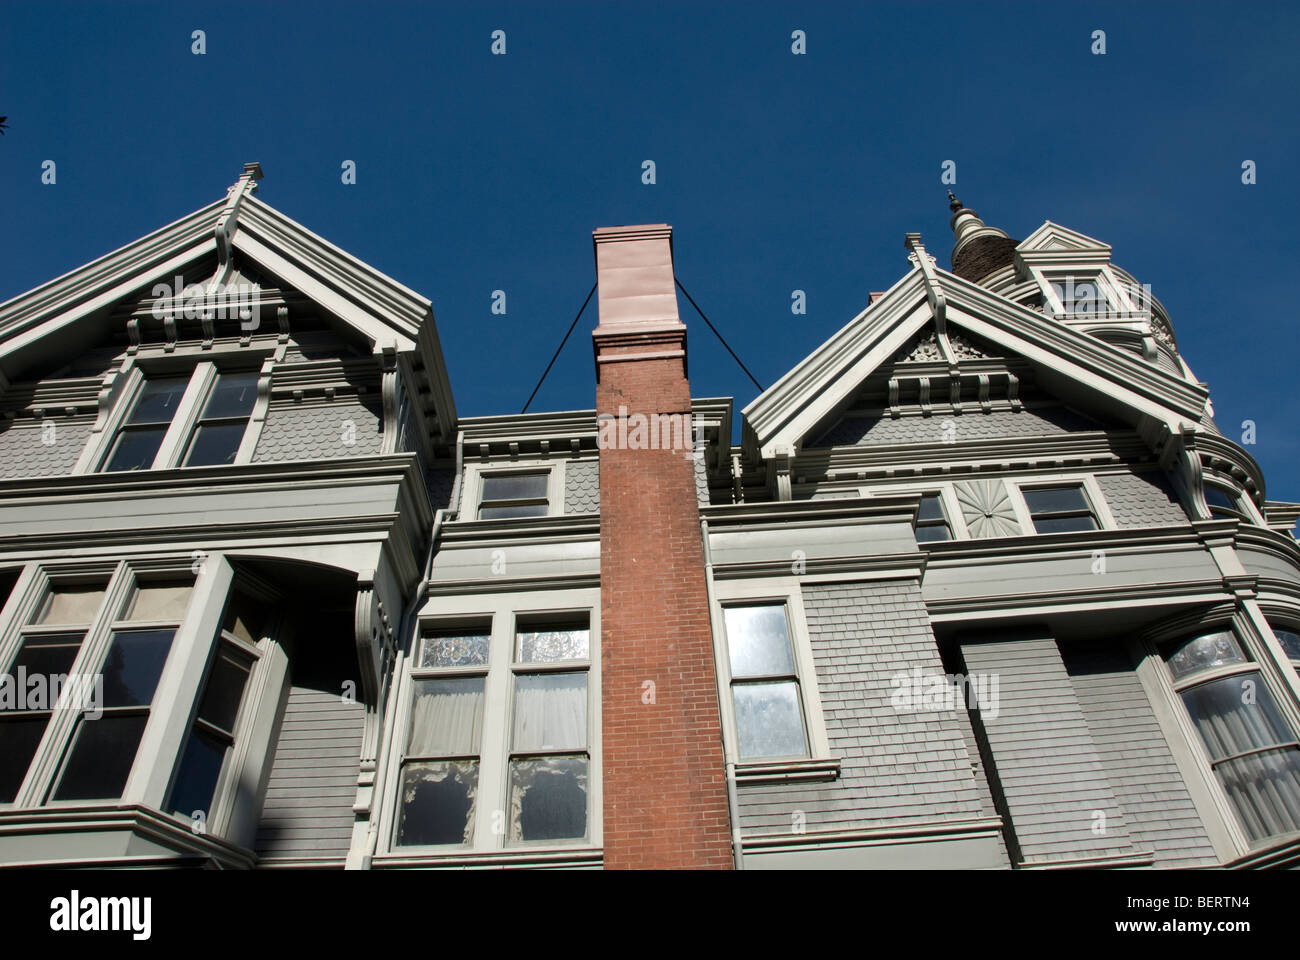 Californie : San Francisco. Haas-Lilienthal house victorienne. Photo copyright Lee Foster. Photo #  : 21-casanf77467 Banque D'Images